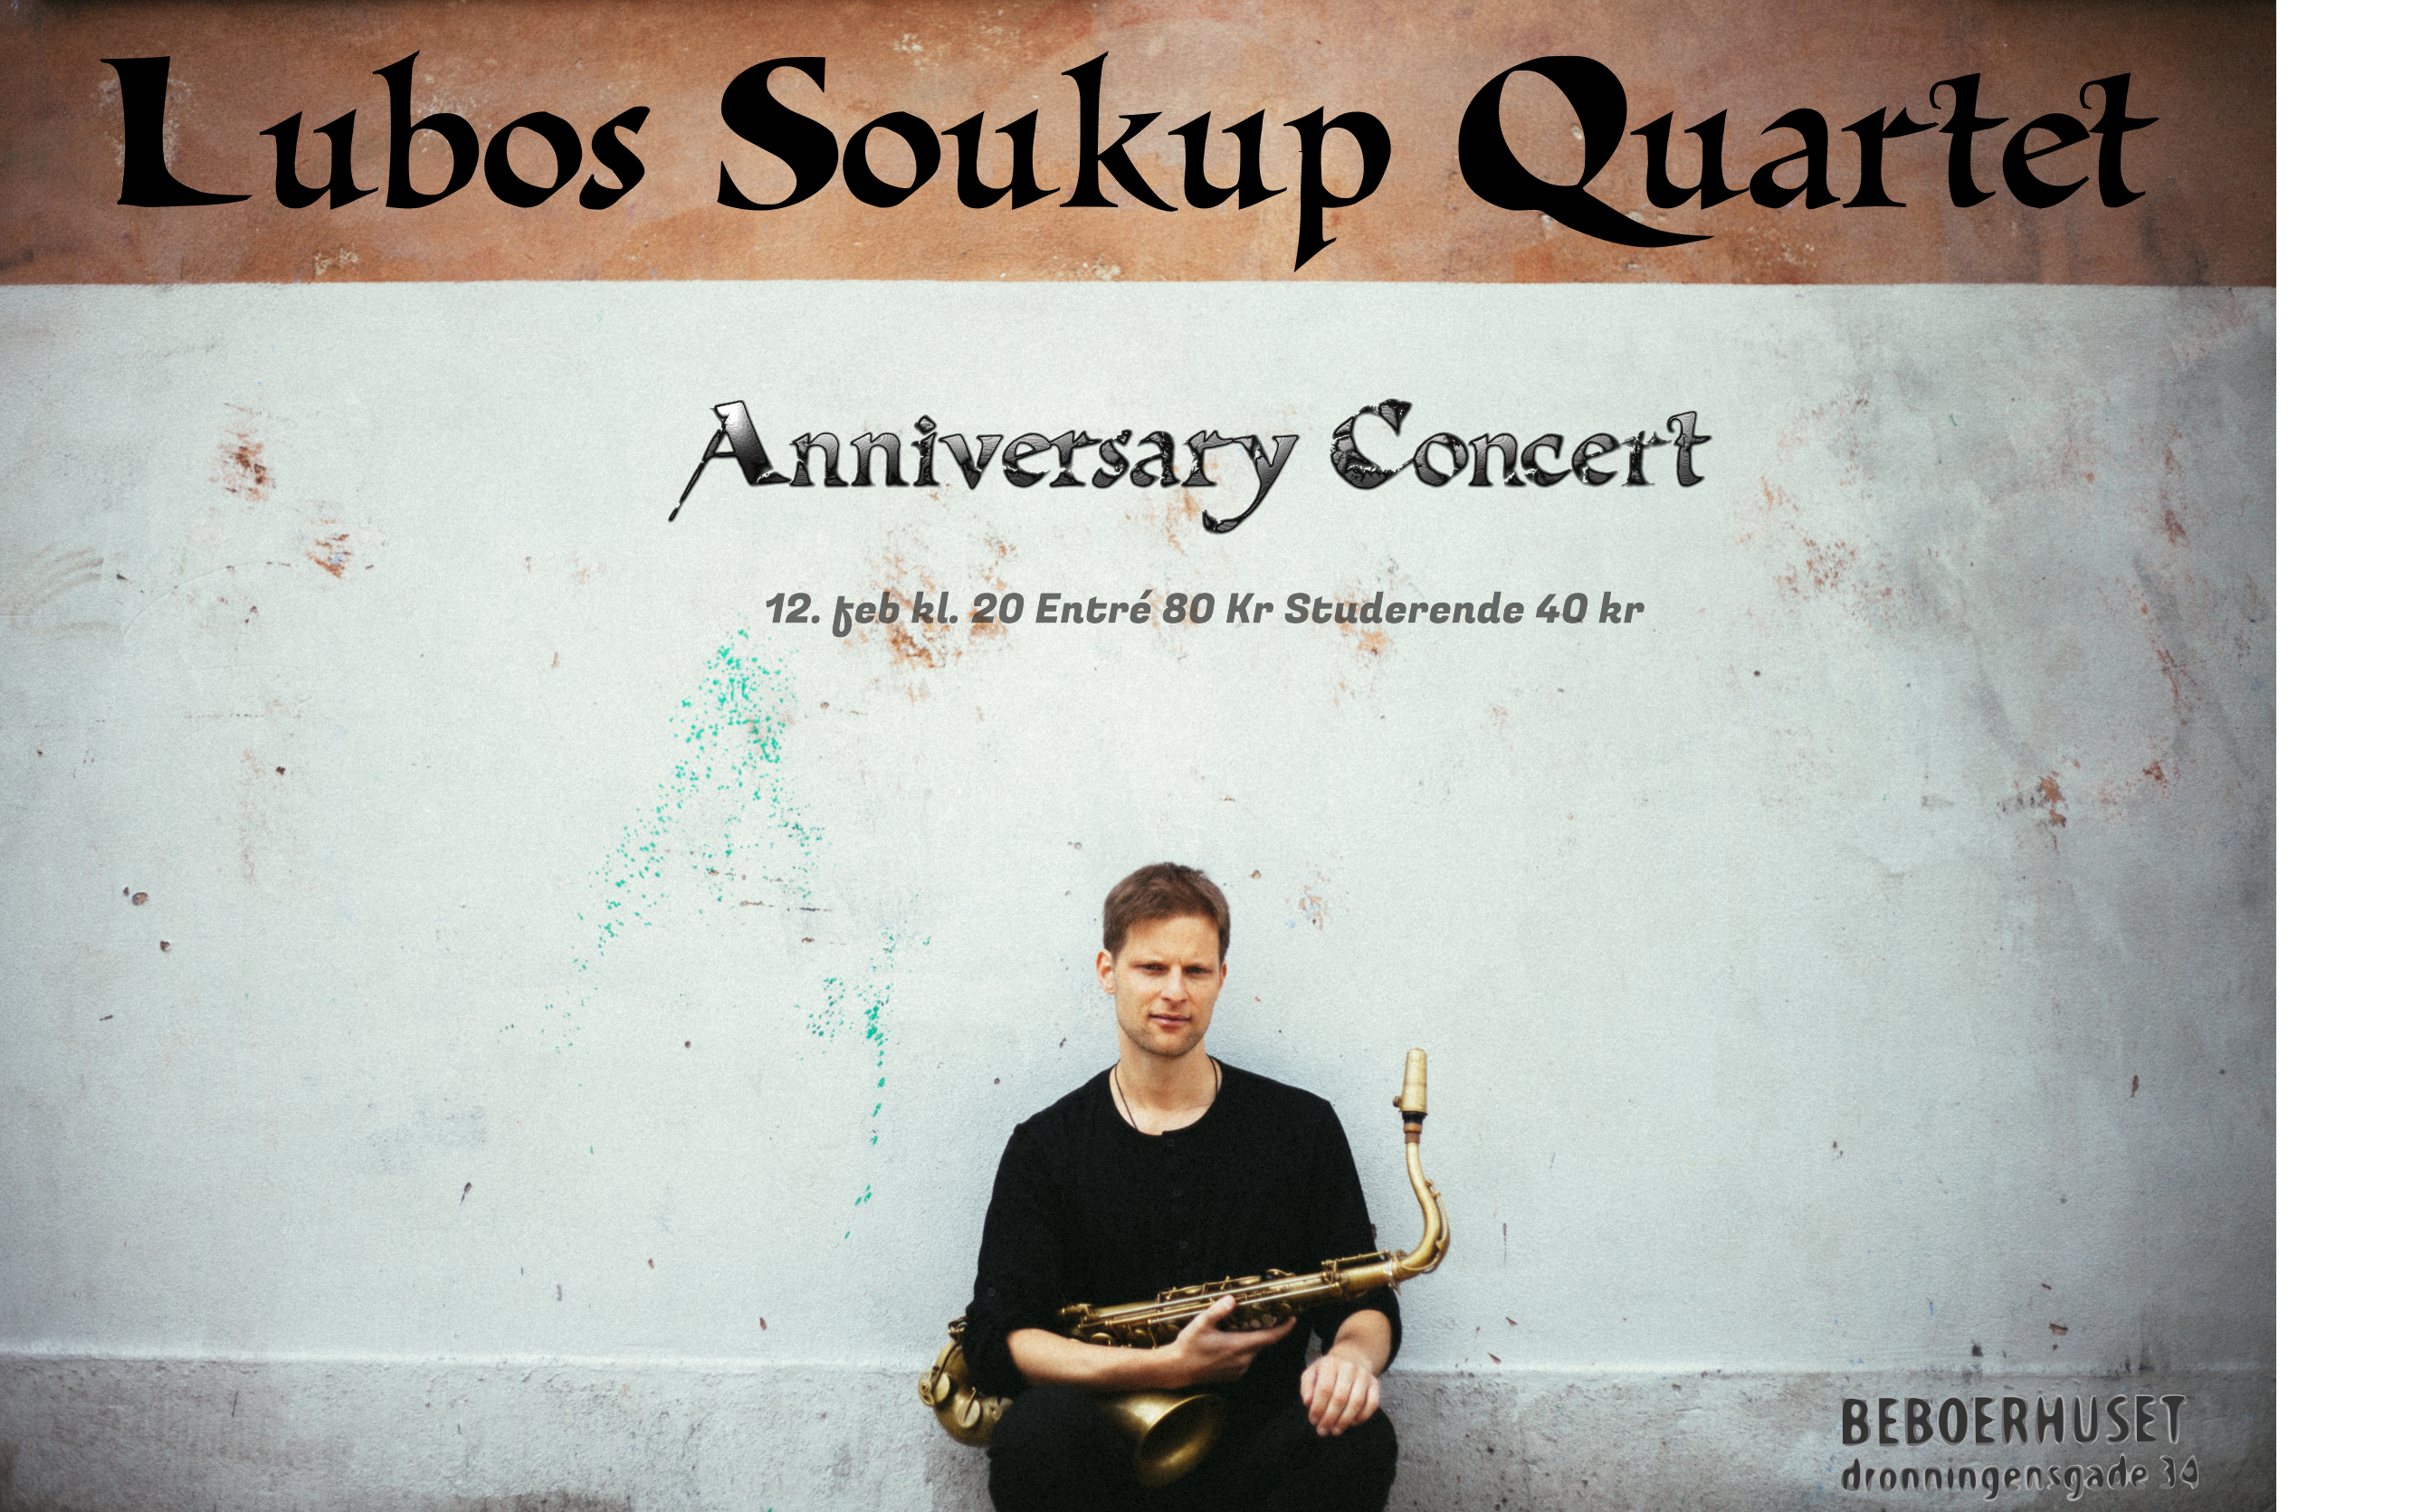 Lubos Soukup Quartet: Anniversary Concert